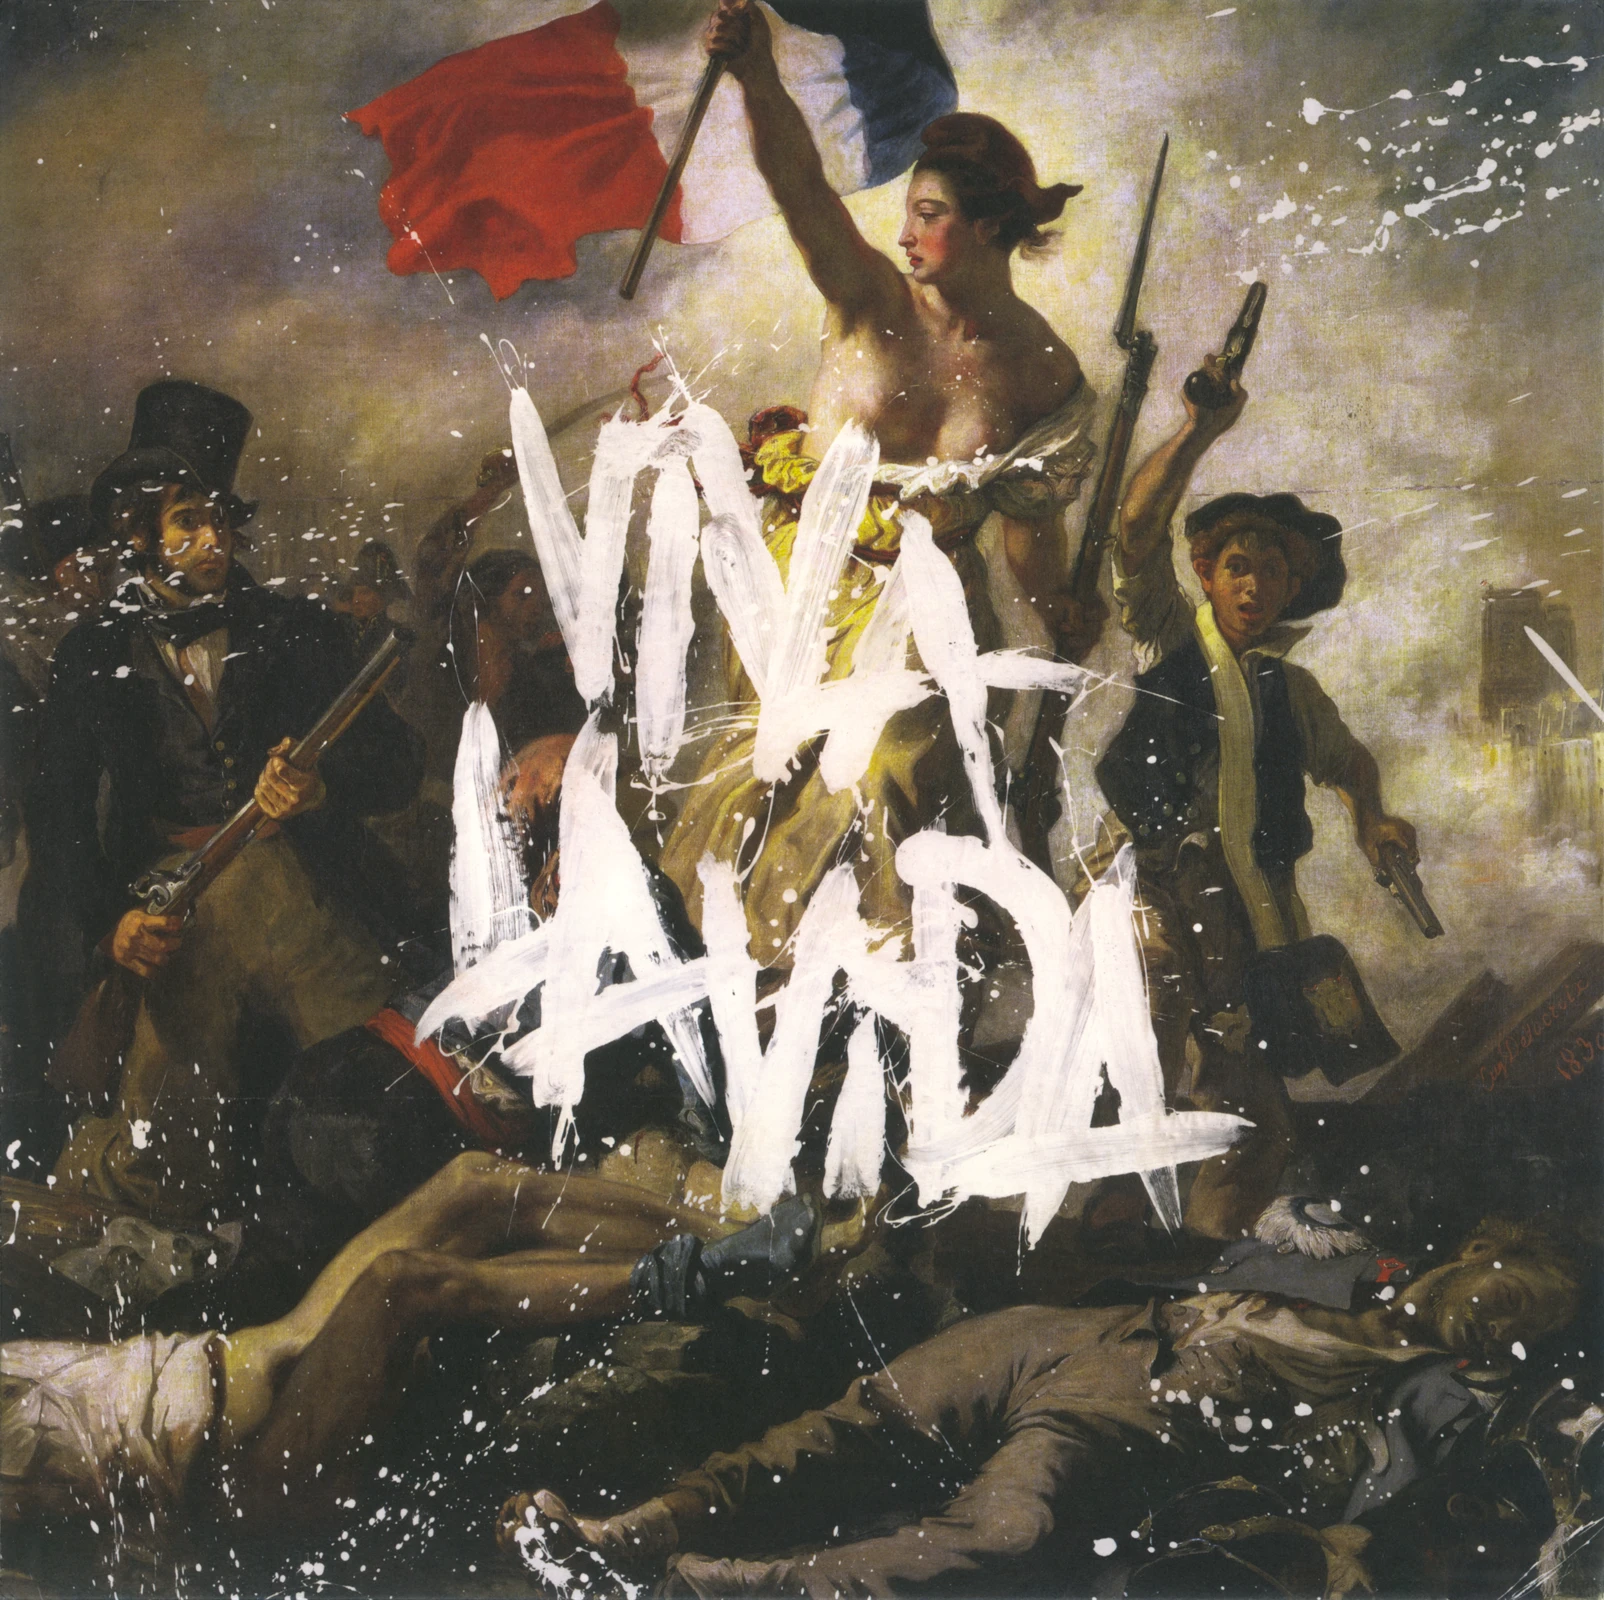 Viva La Vida Or Death And All His Friends – Coldplay